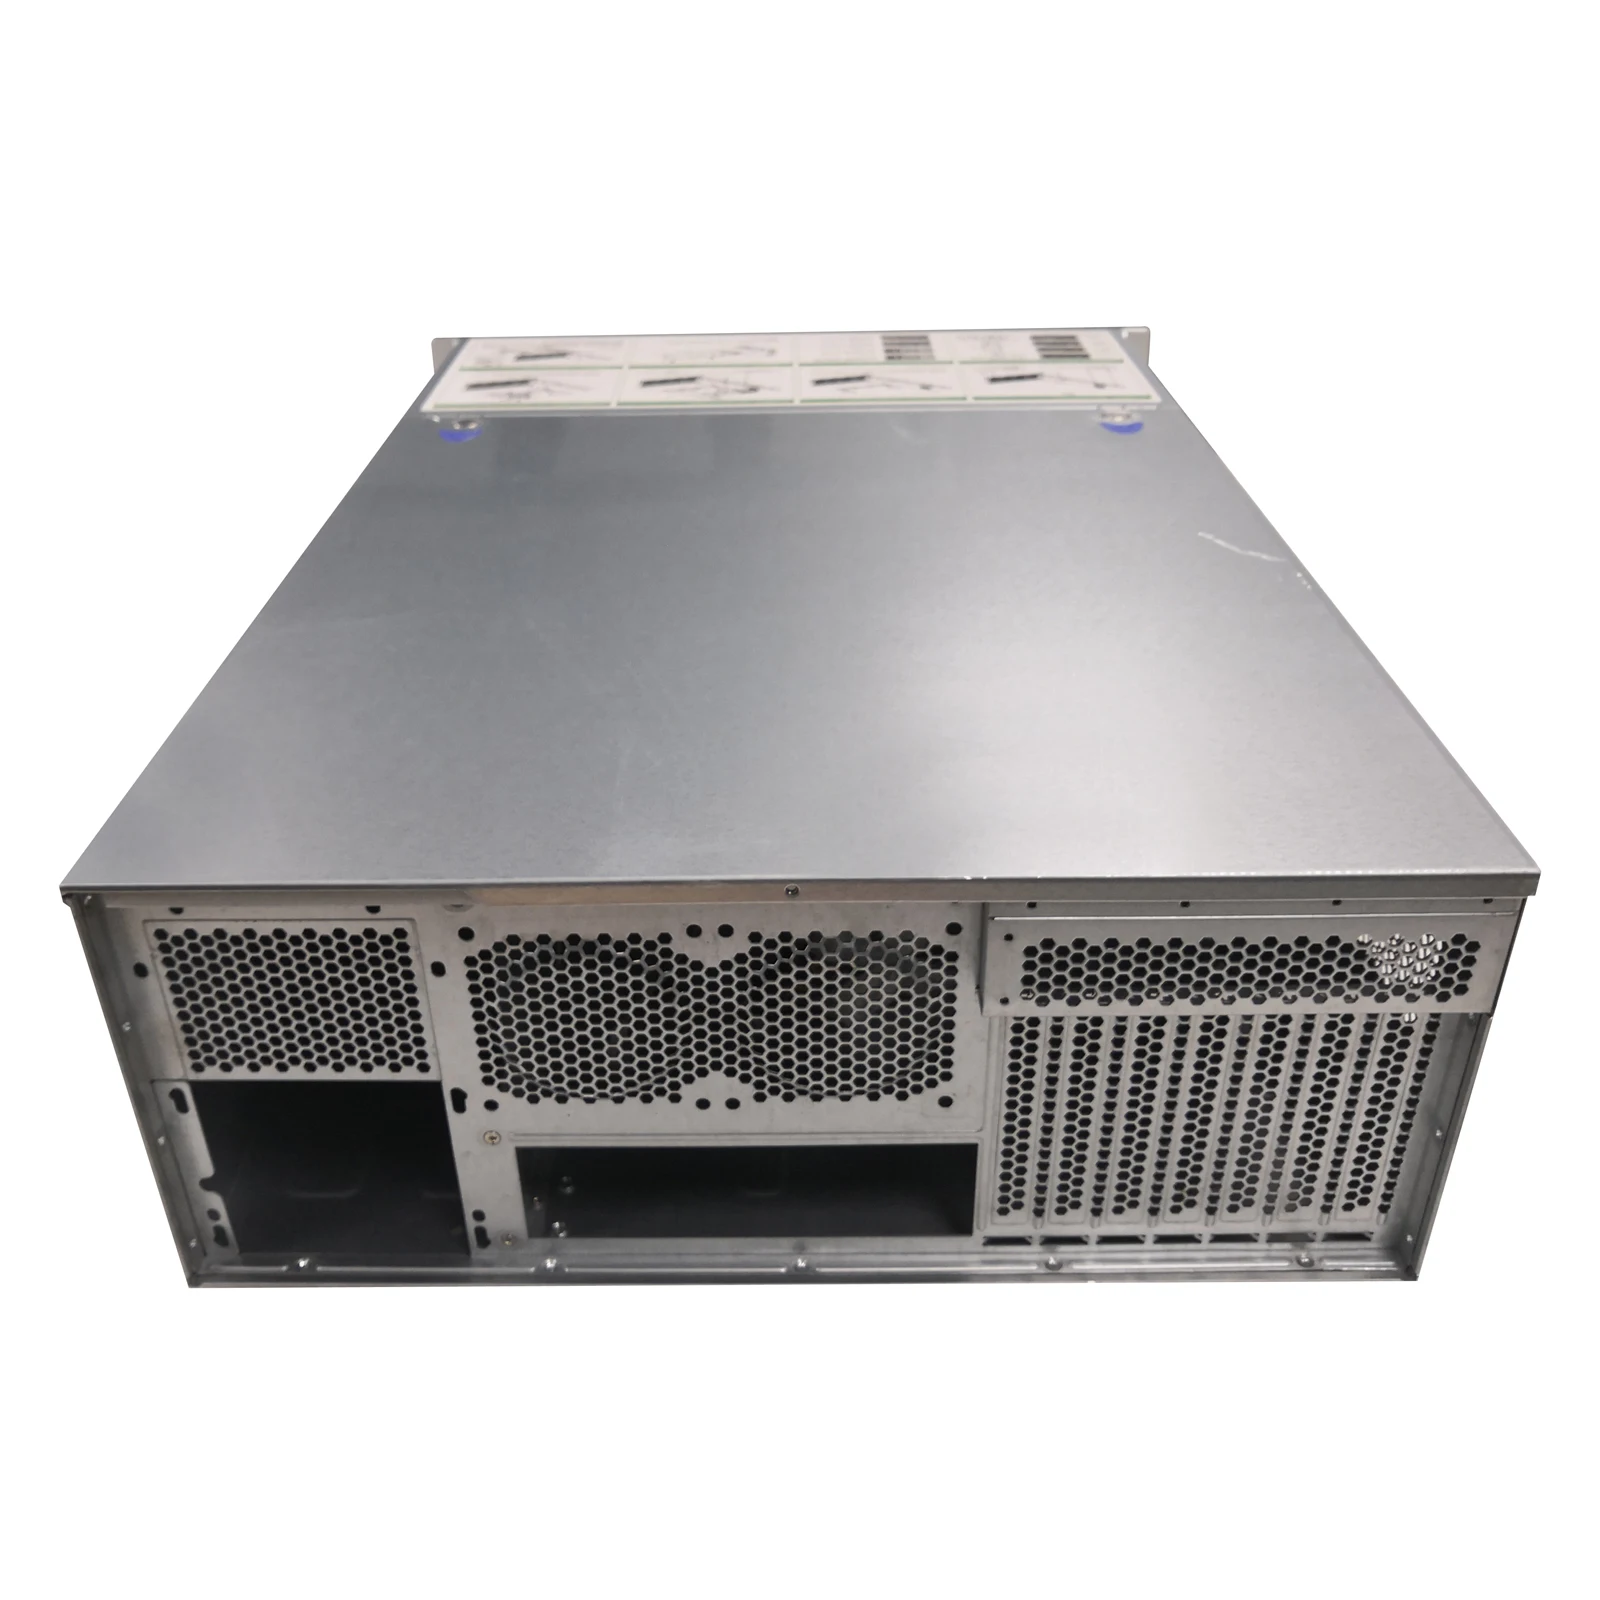 4U стойка Горячая замена шасси 24 отсека HDD NVR IPFS Облачное хранилище сервер S465-24 6 ГБ мини SAS backplane 650 мм